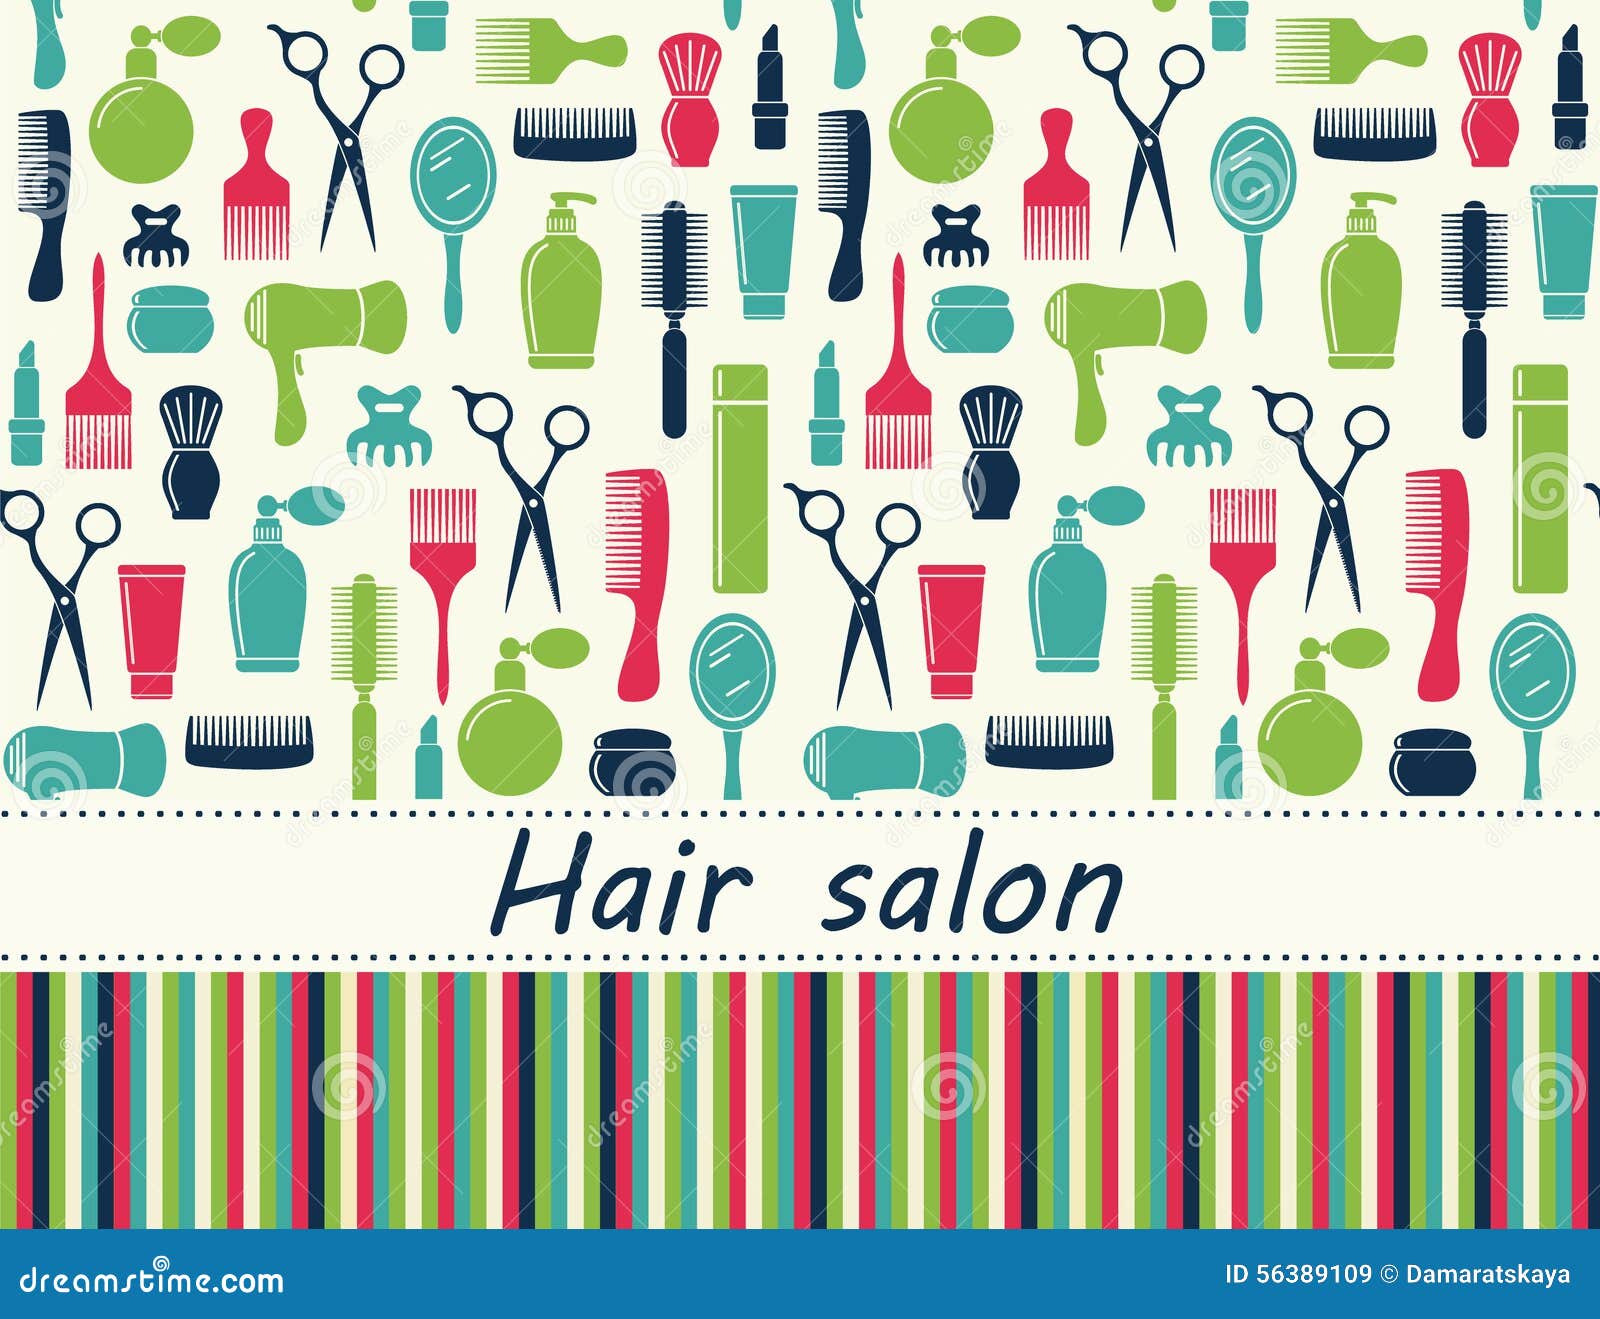 Hair Beauty salon backgroundillustration Stock Vector Image by margolana  59071239